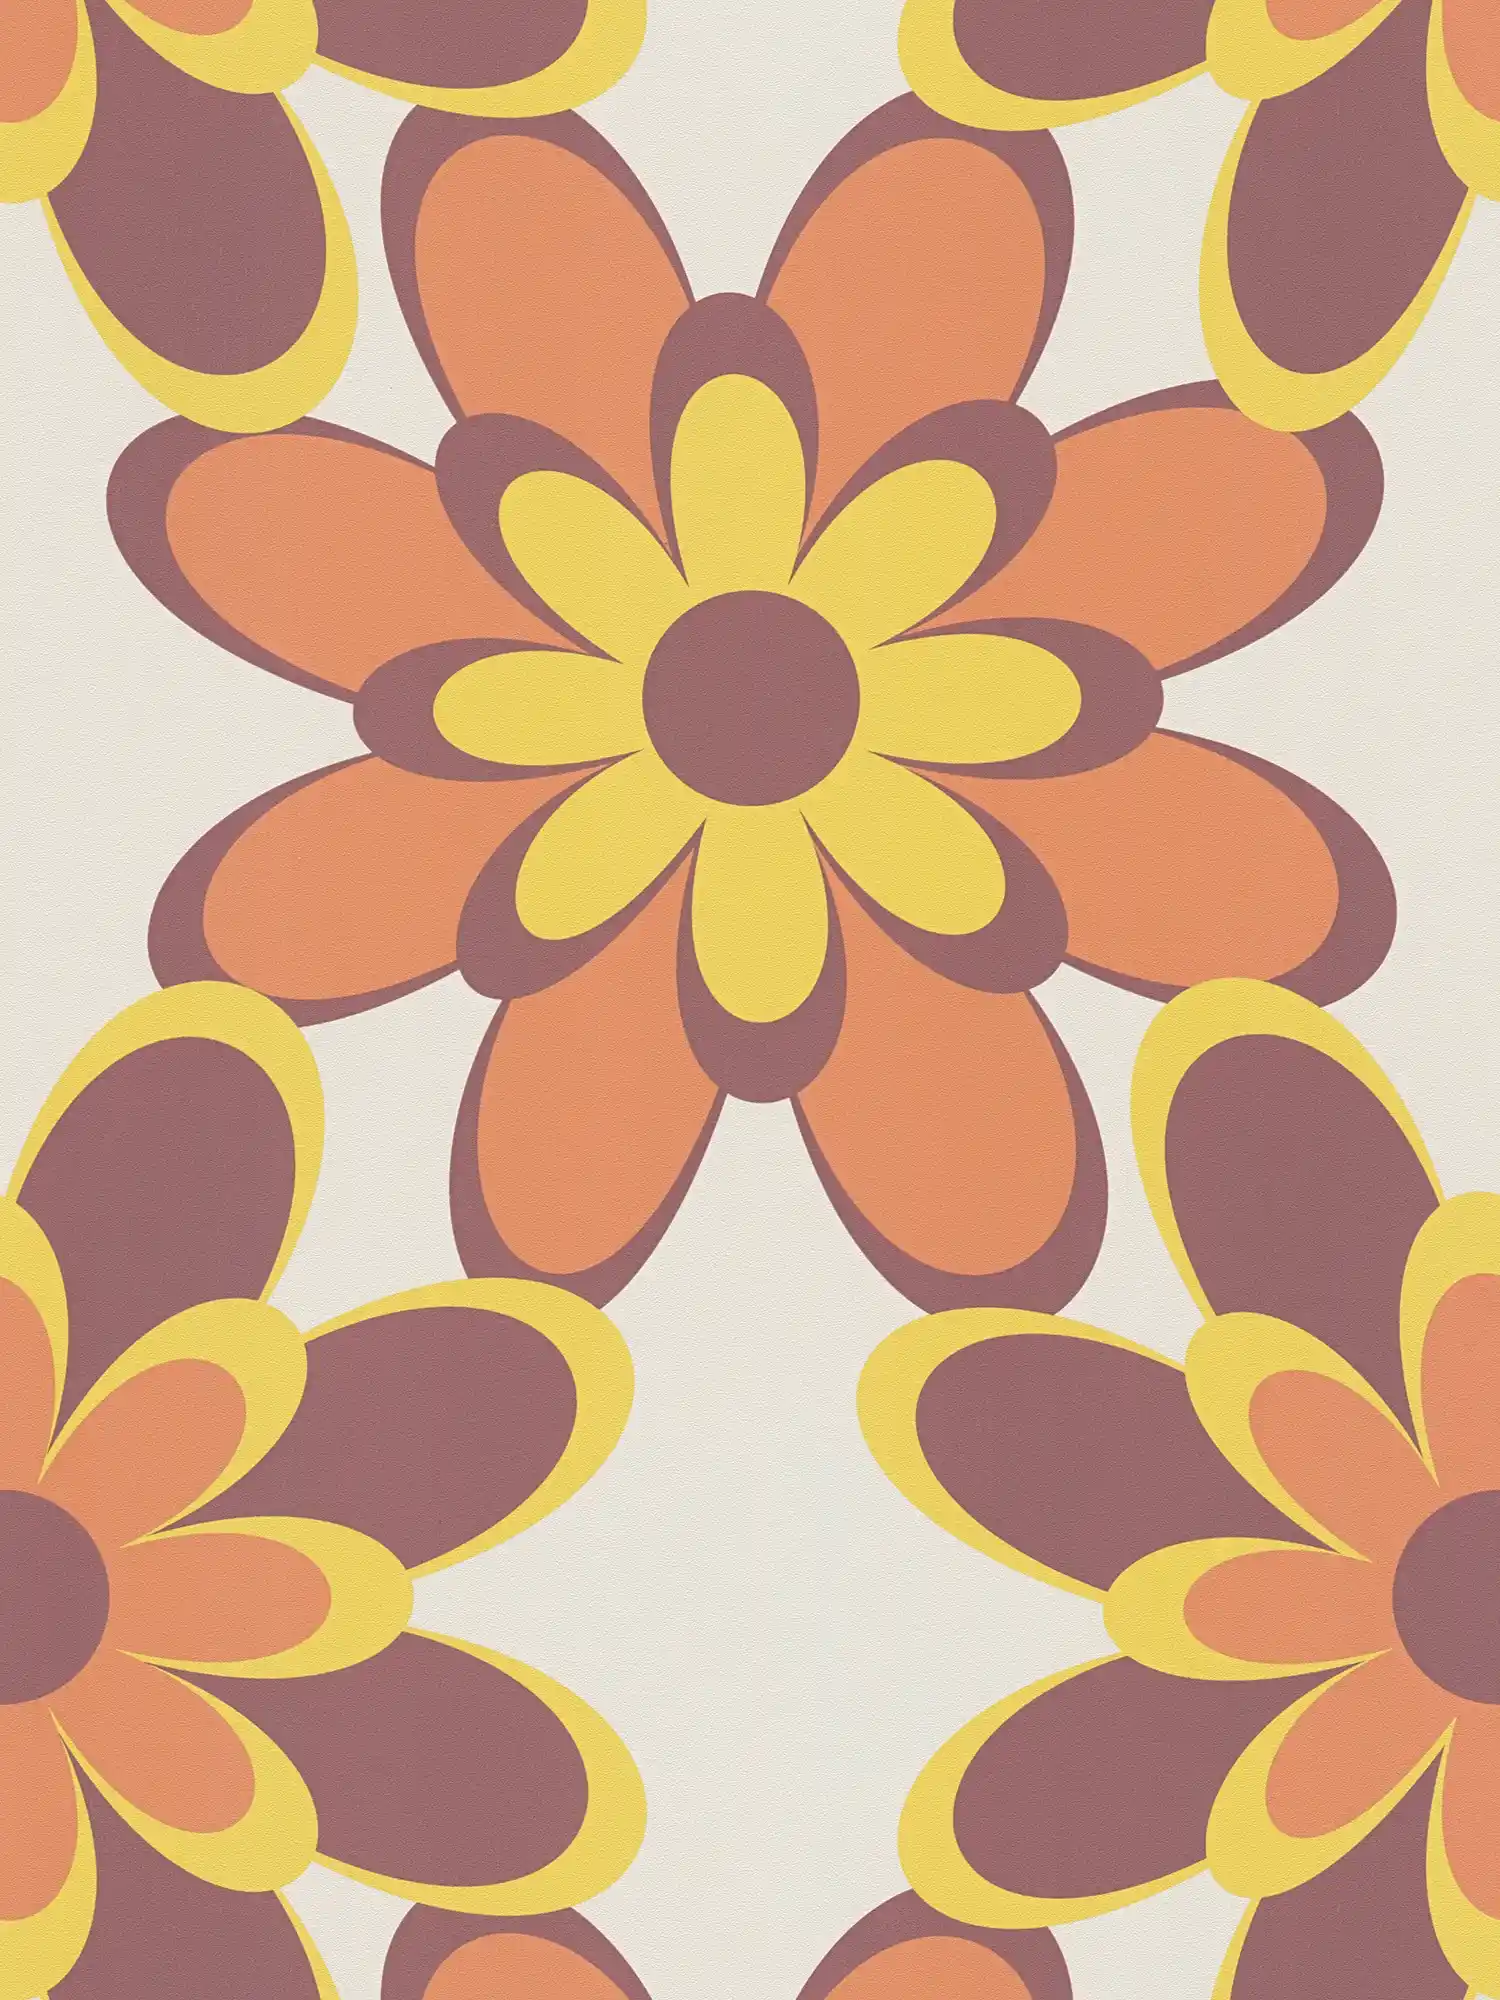         Retro wallpaper 70s floral pattern - orange, yellow, brown
    